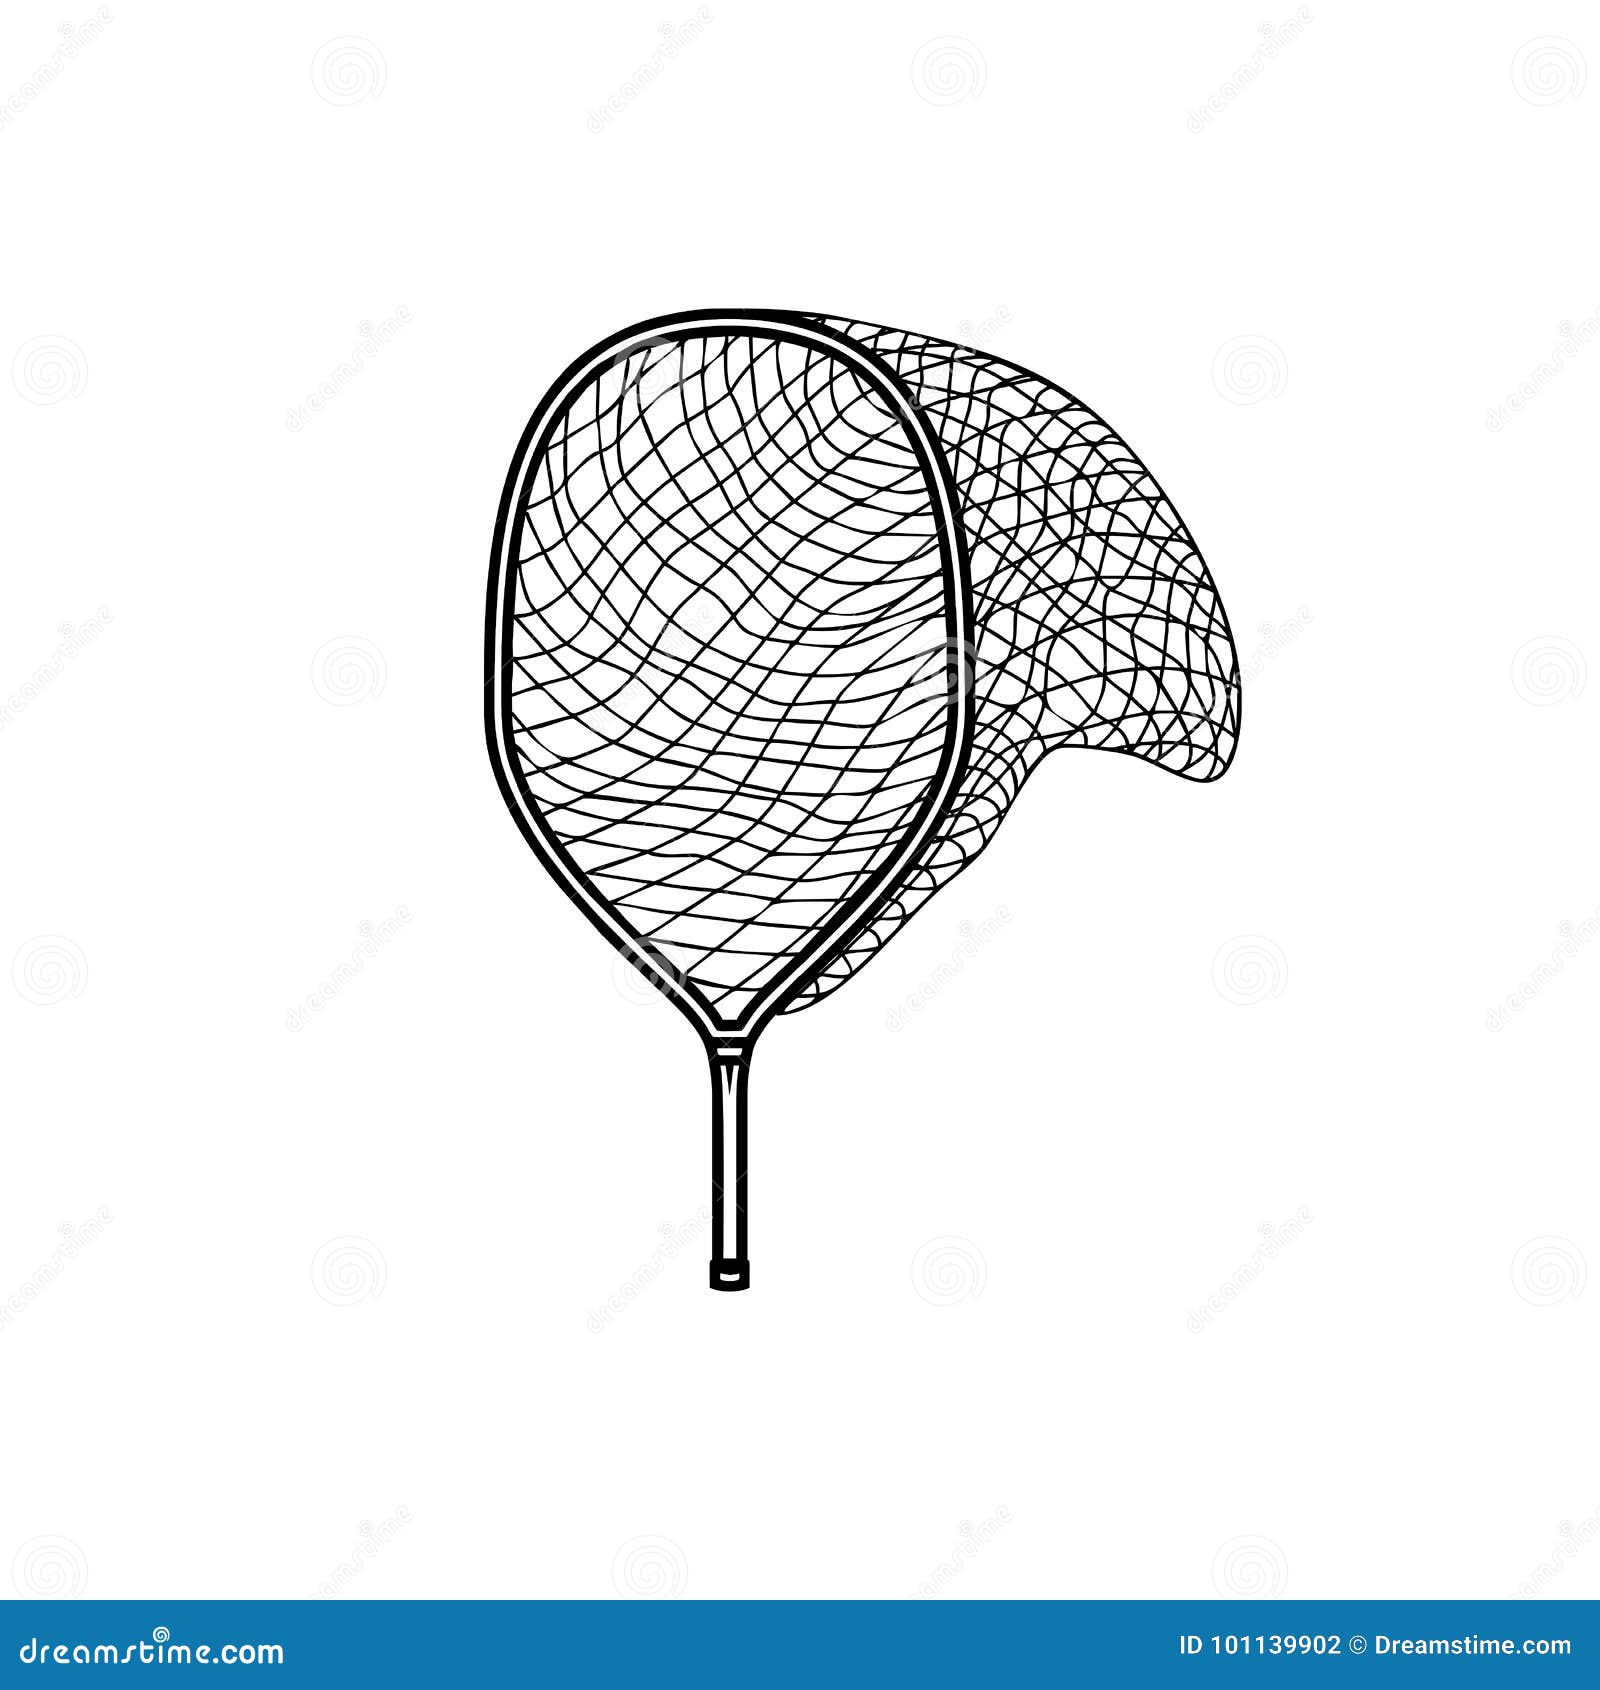 Fishing net vector stock vector. Illustration of river - 101139902